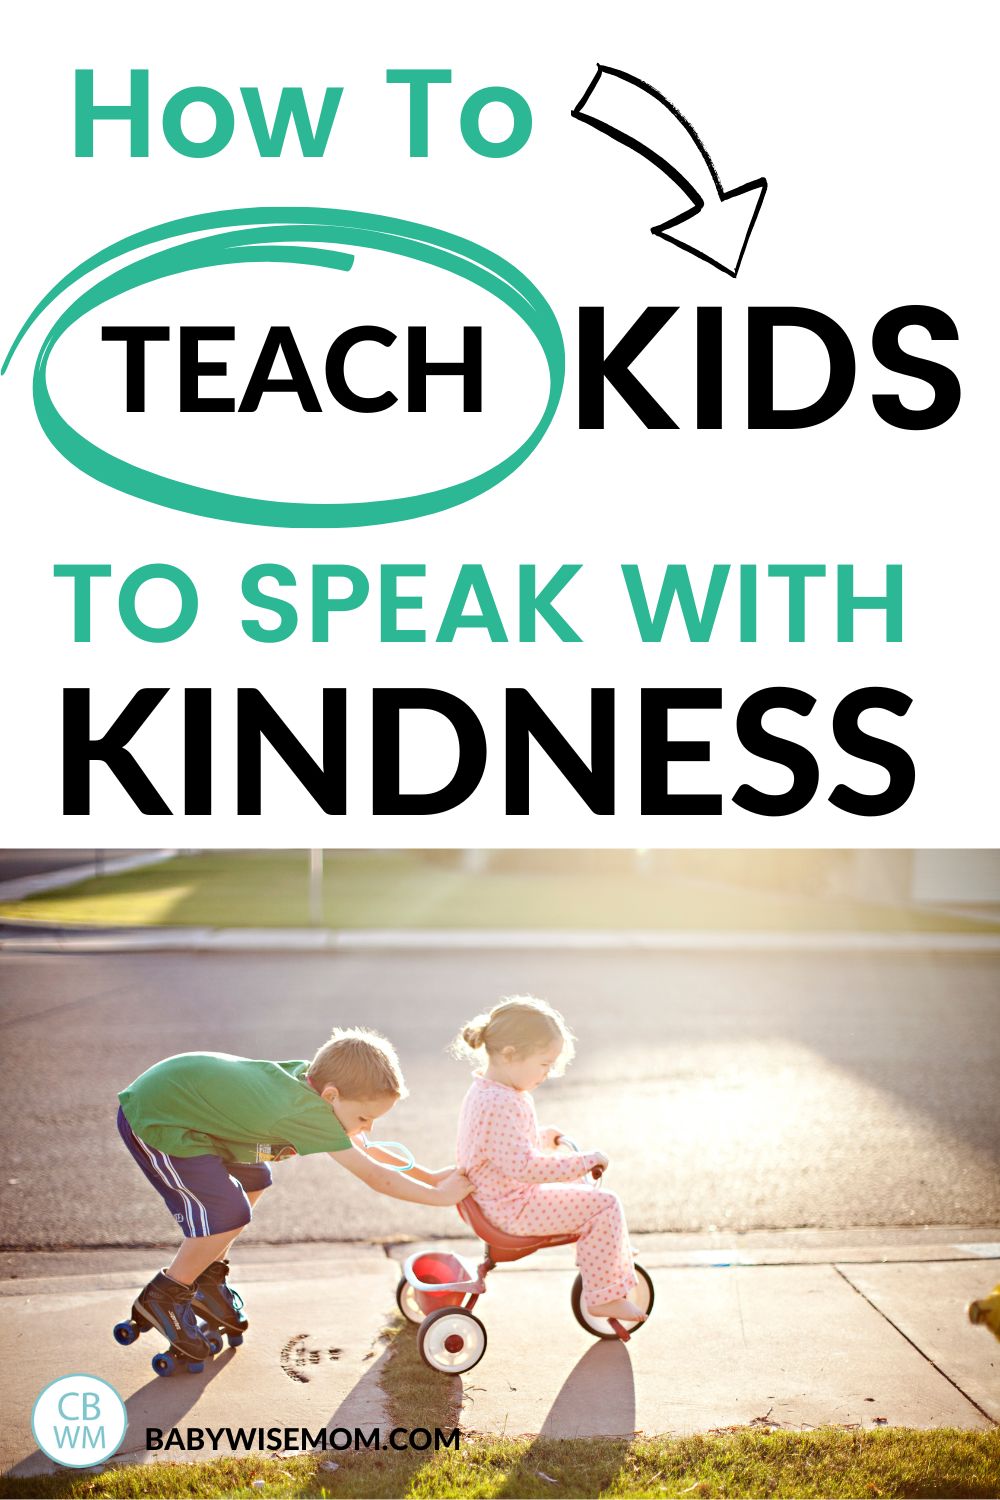 Teach kids to speak with kindness